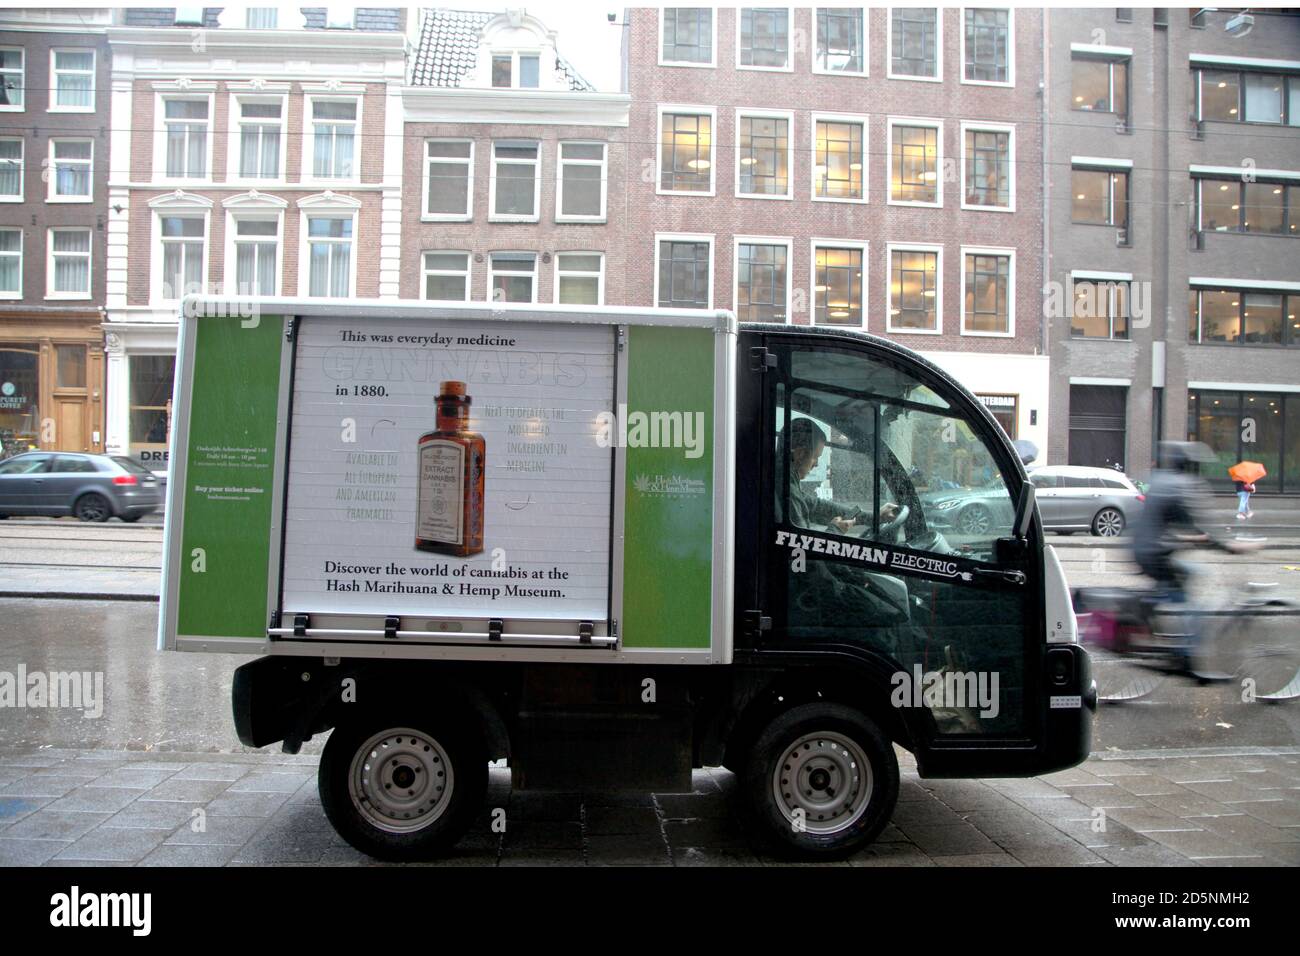 Van carrying advertisement for Hash Marihuana and Hemp Museum in Amsterdam Stock Photo